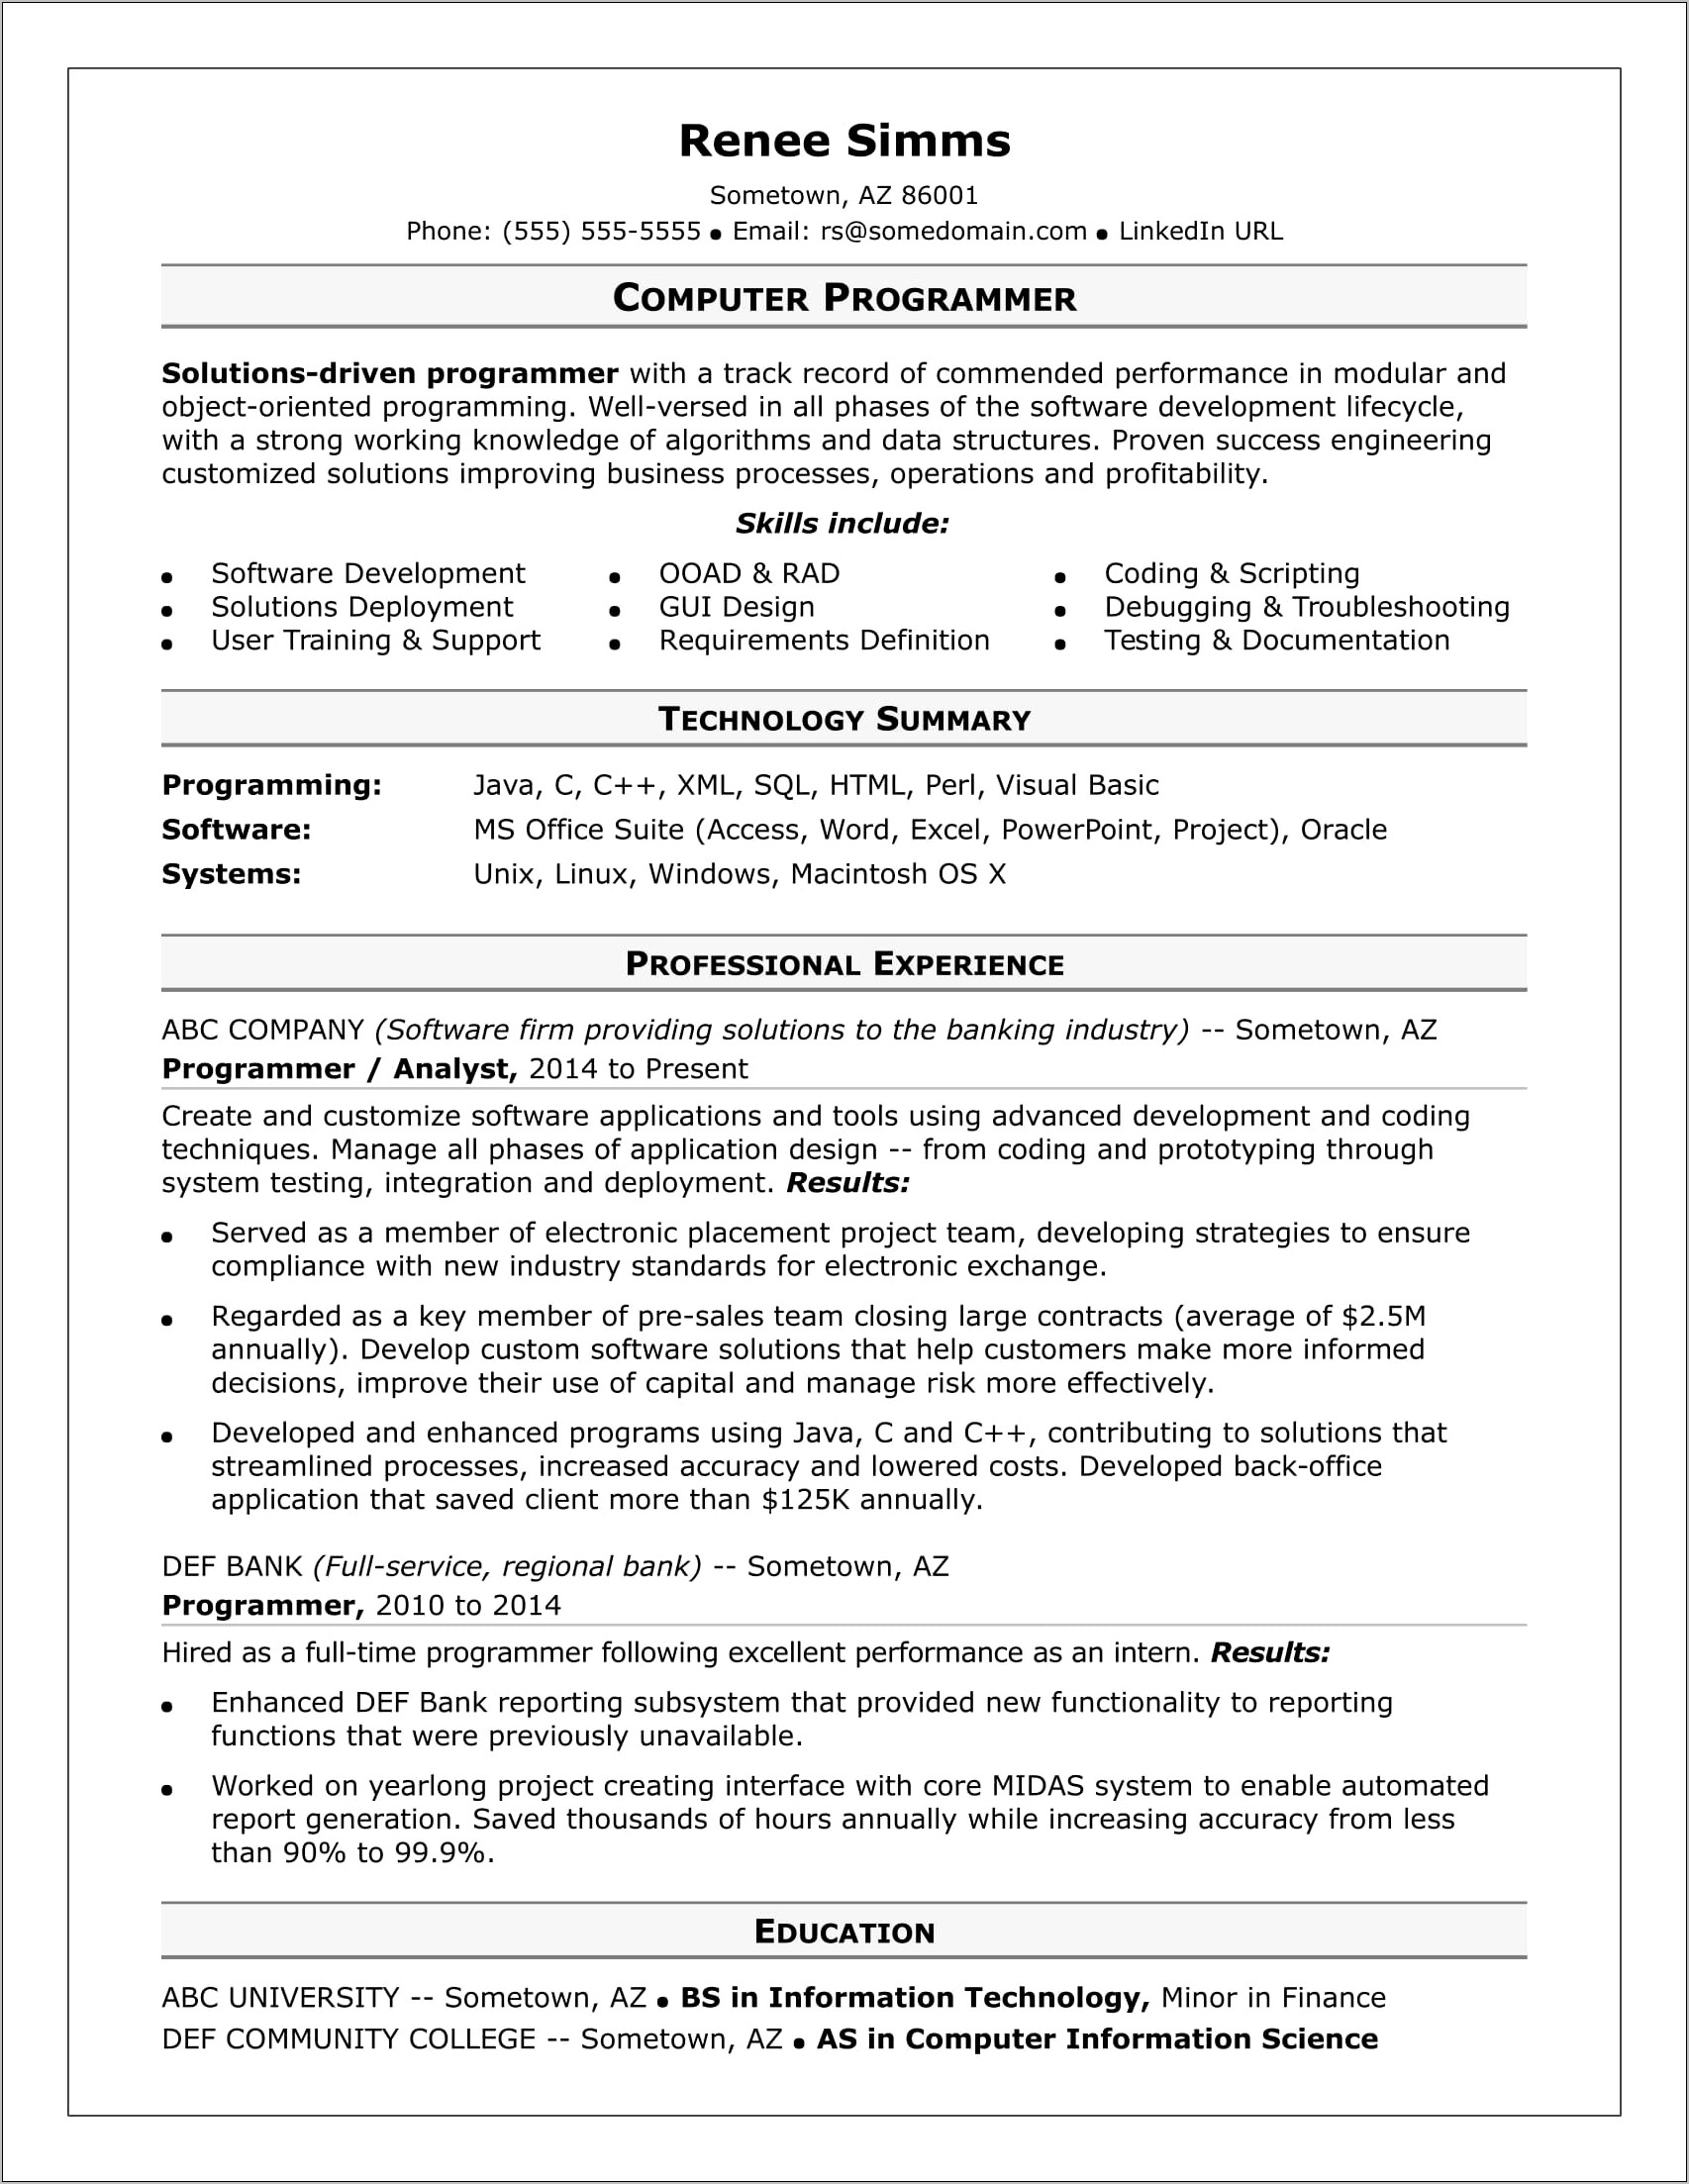 Resume Objective For Computer Programmer